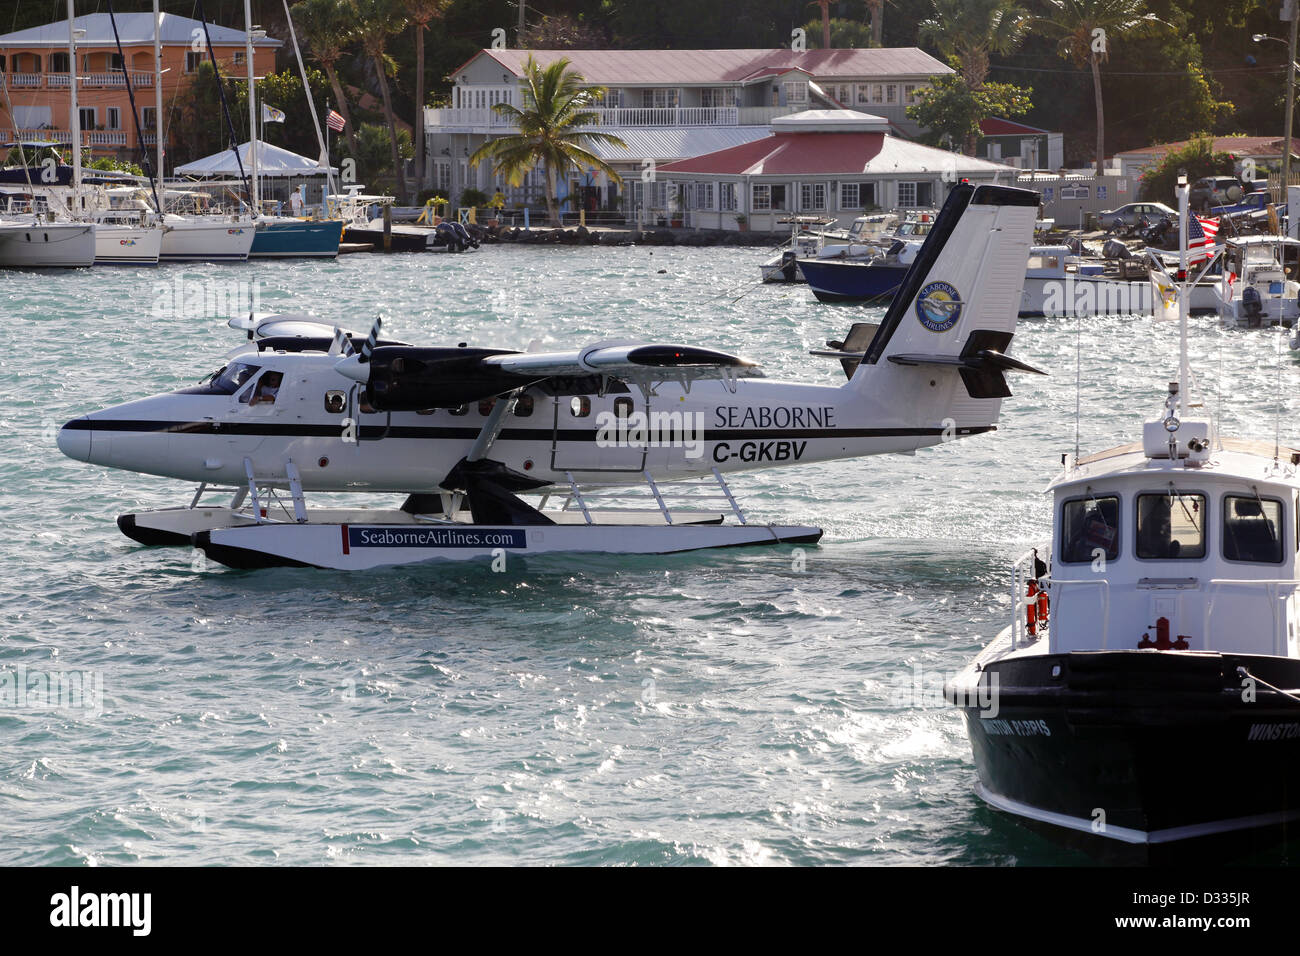 Seaborne Airlines Wasserflugzeug, Charlotte Amalie, St. Thomas, US Virgin Islands, Karibik Stockfoto